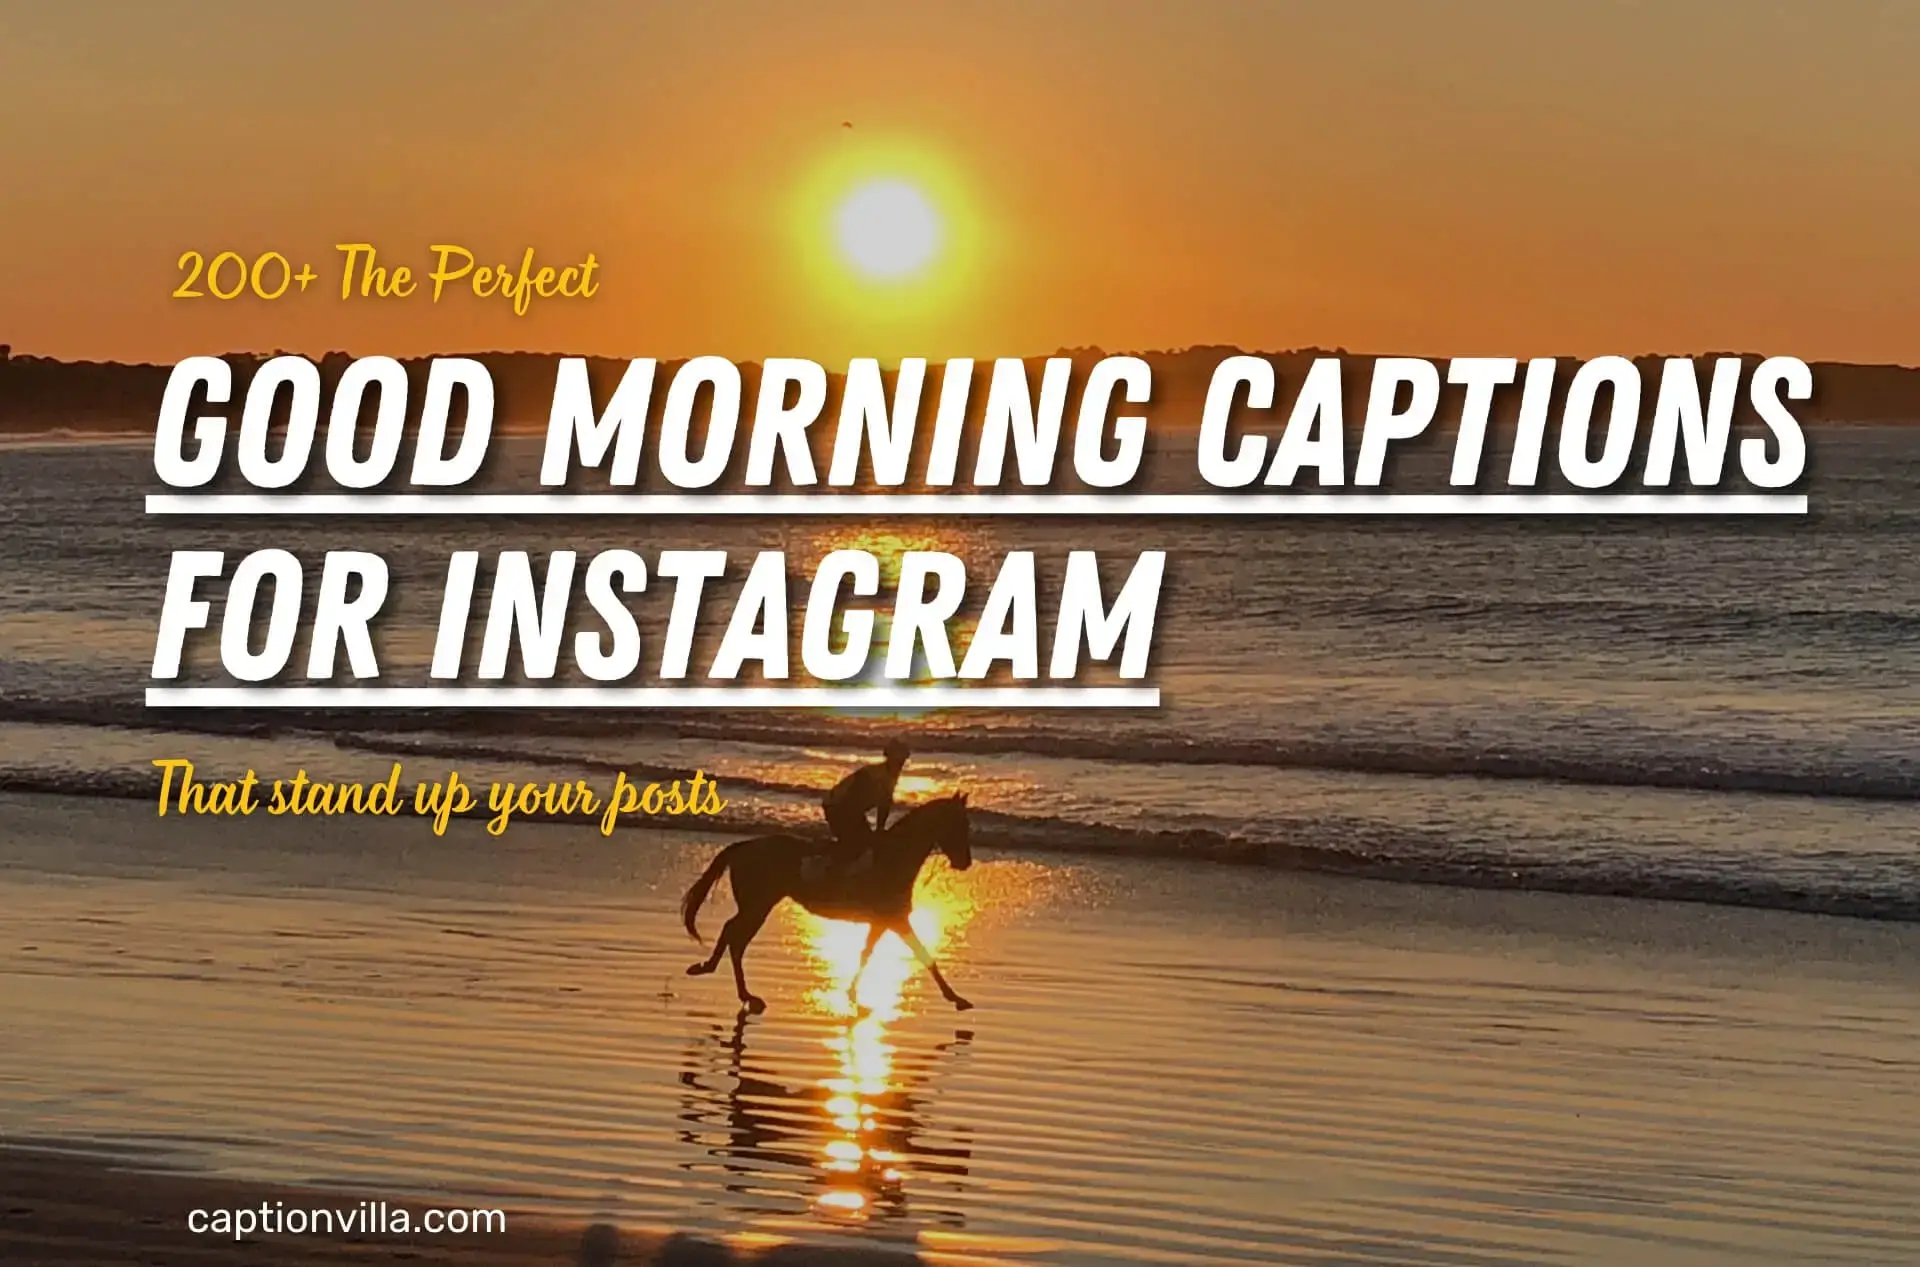 200+ The perfect Good Morning Captions for Instagram #Captionvilla #MorningVibes #InstagramCaptions #GoodMorningQuotes #SocialMediaInspiration